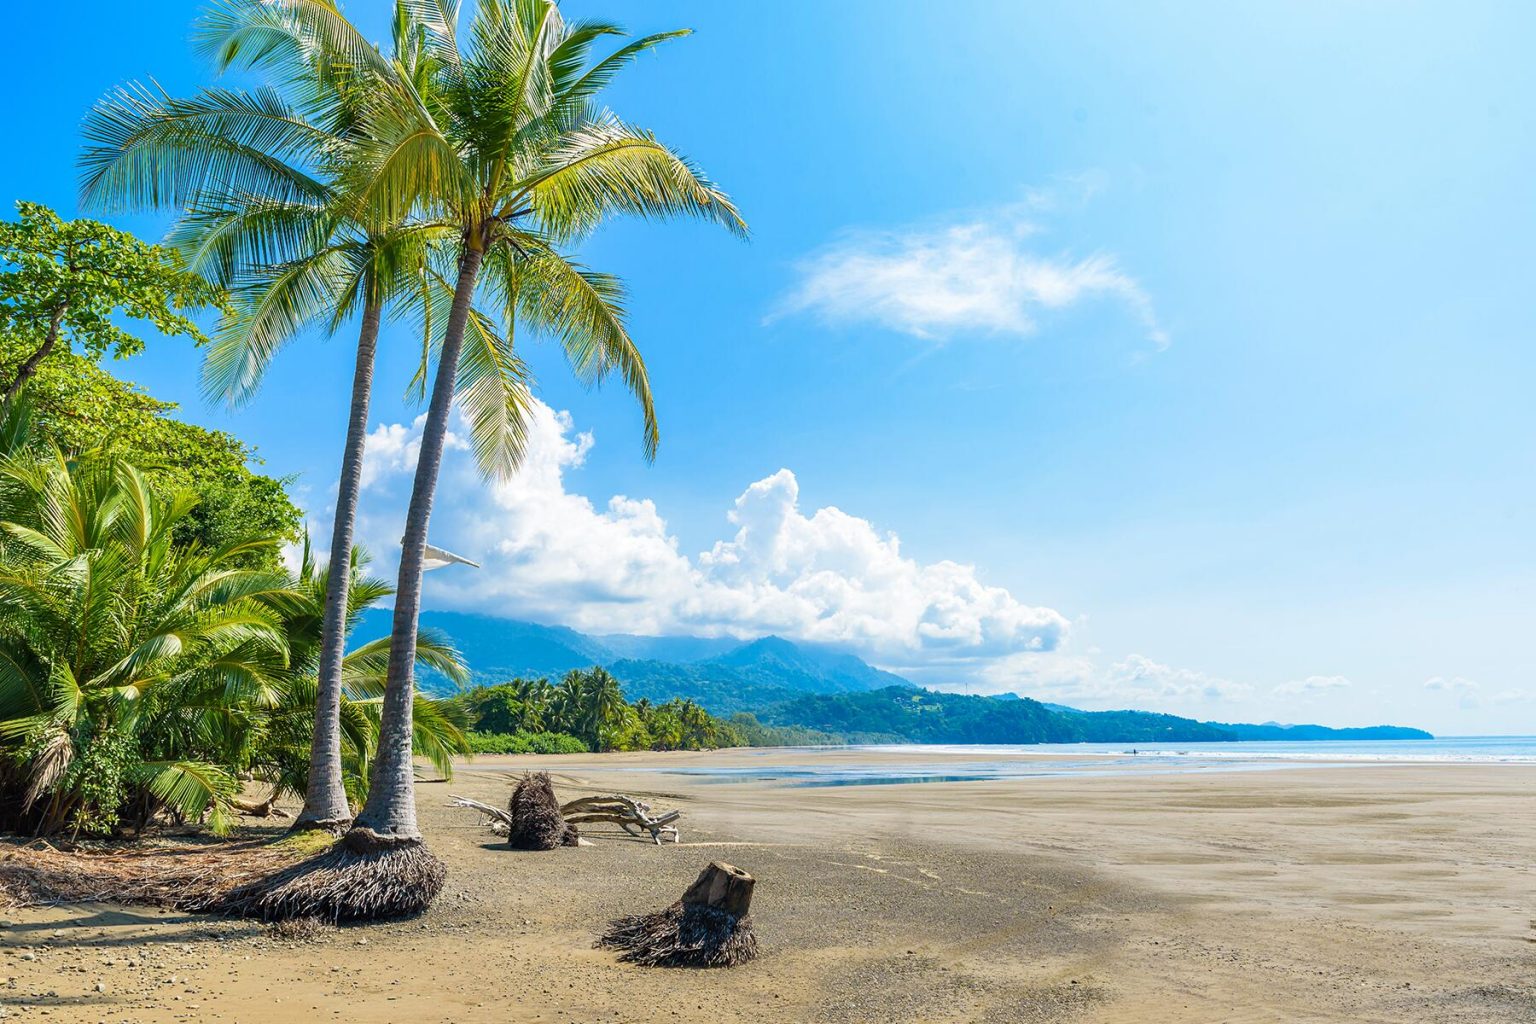 Costa Rican beaches